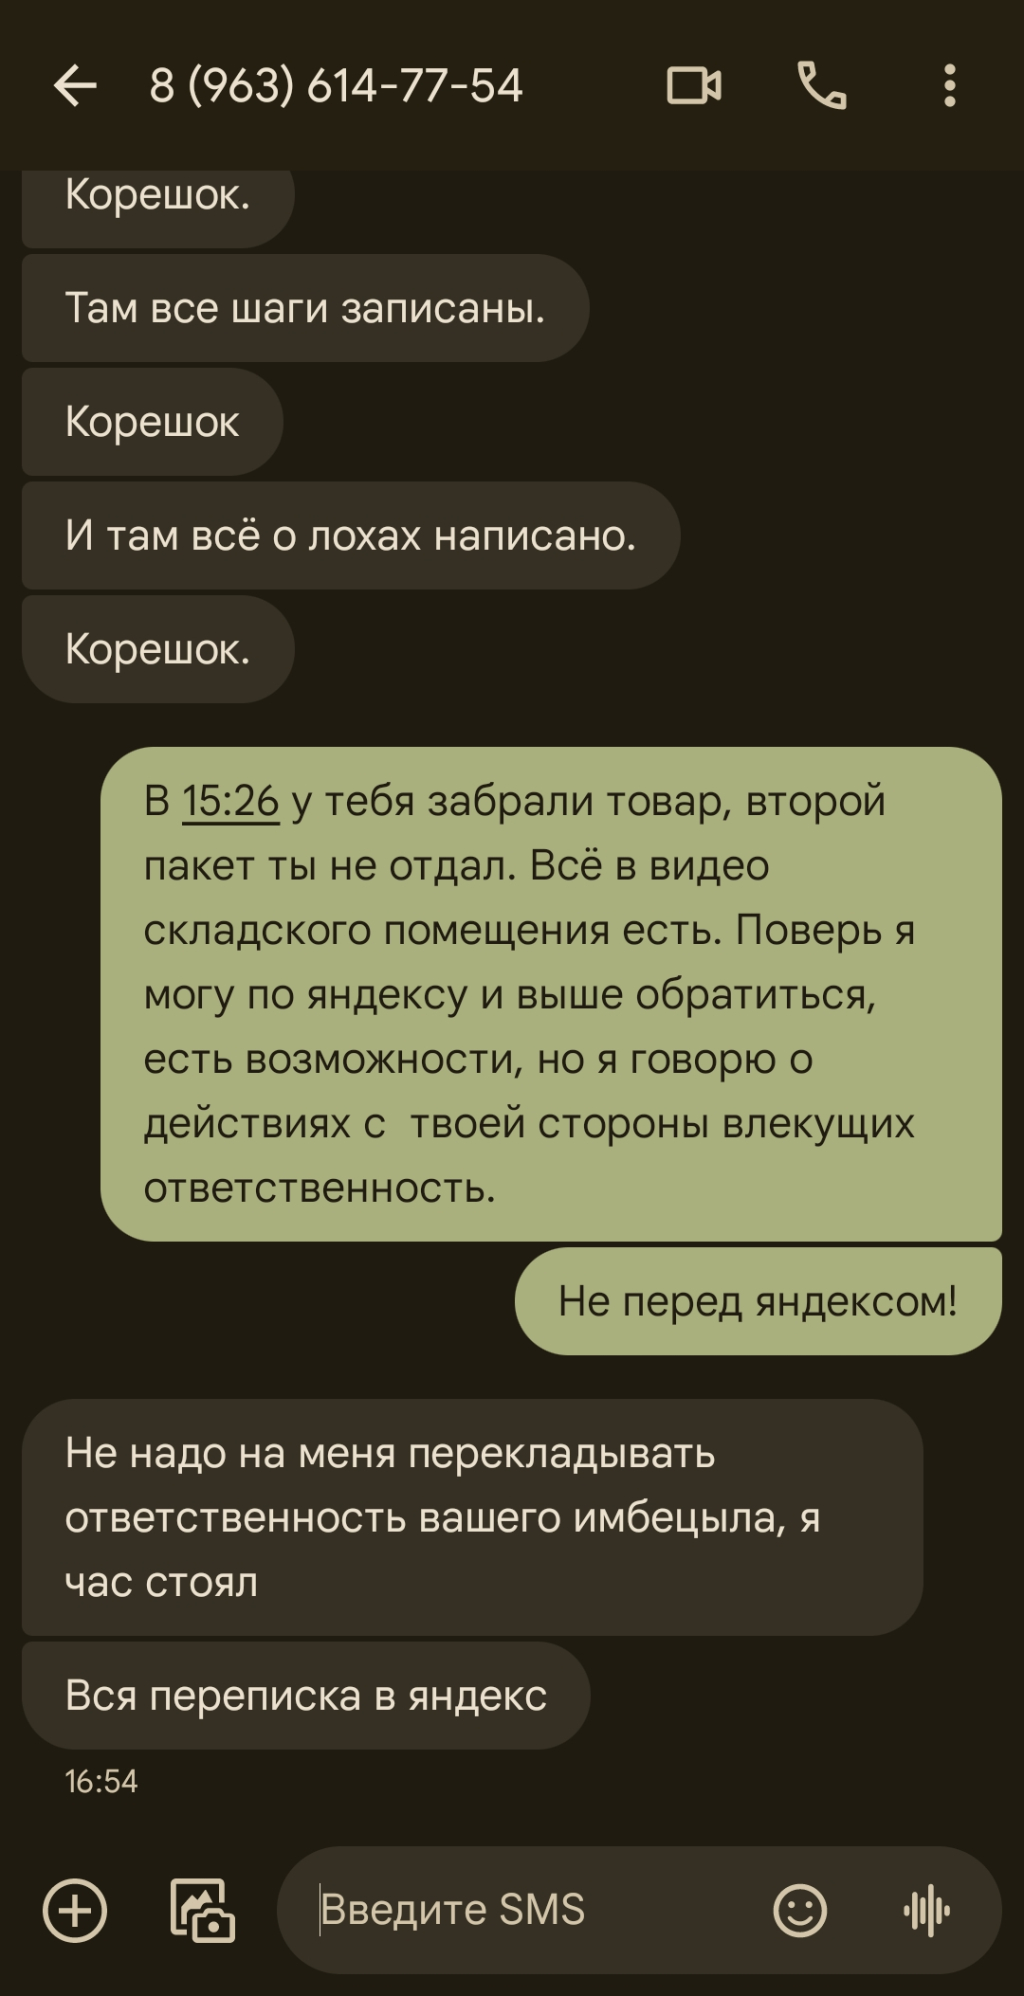 Яндекс Go - Водитель украл товар, занимался шантажом, яндекс не помог!